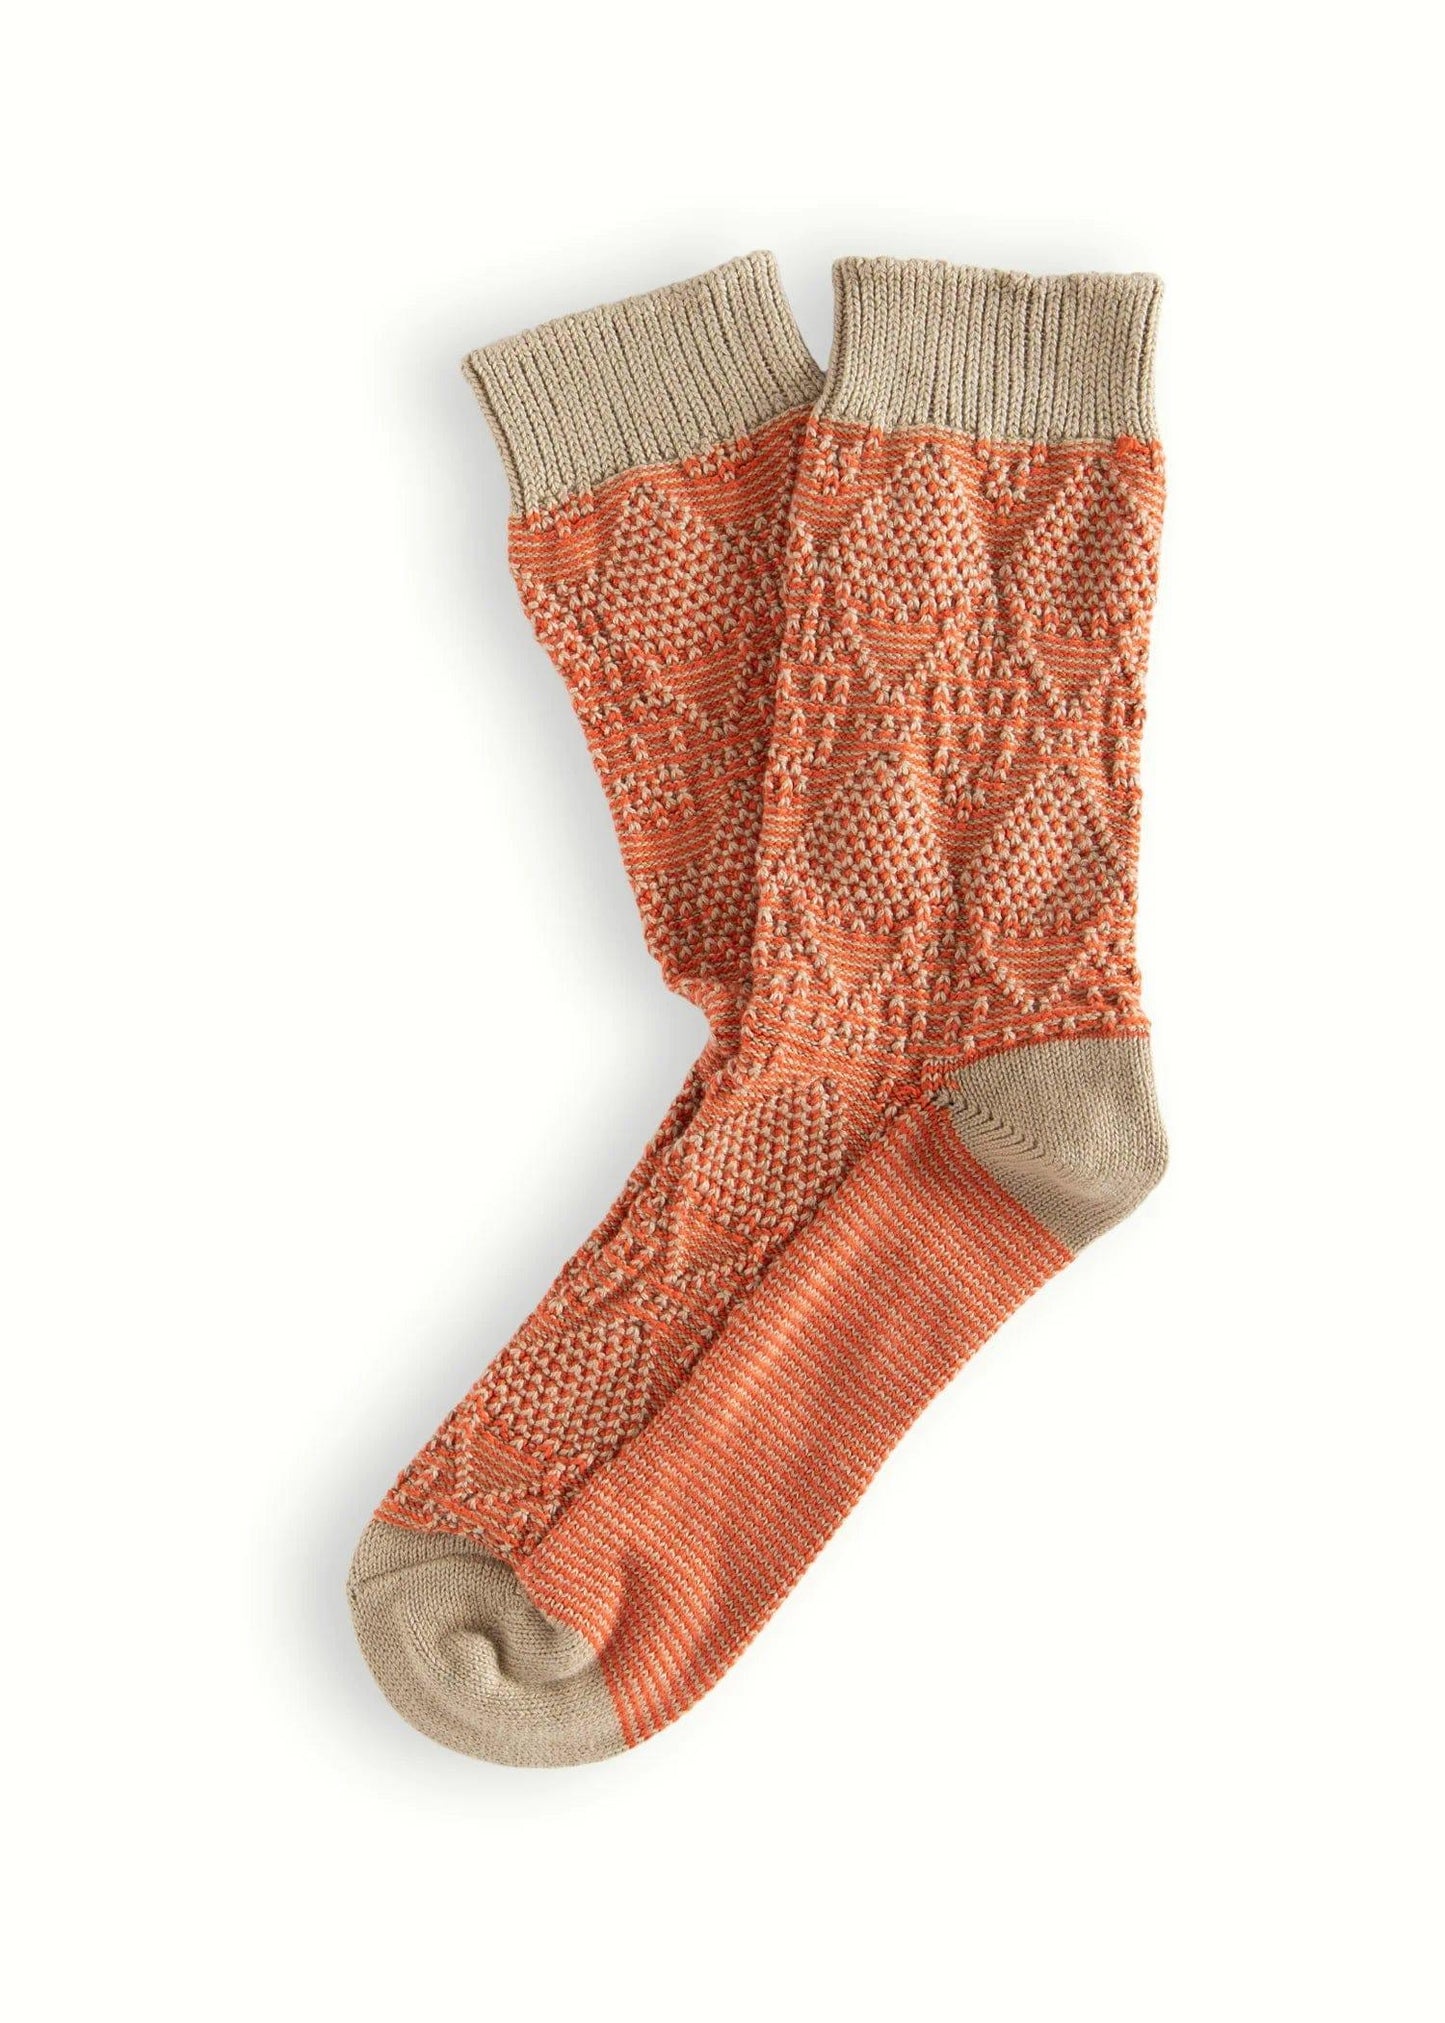 Thunders Love Socks LINK Collection Criss-Crossed Beige & Orange Socks